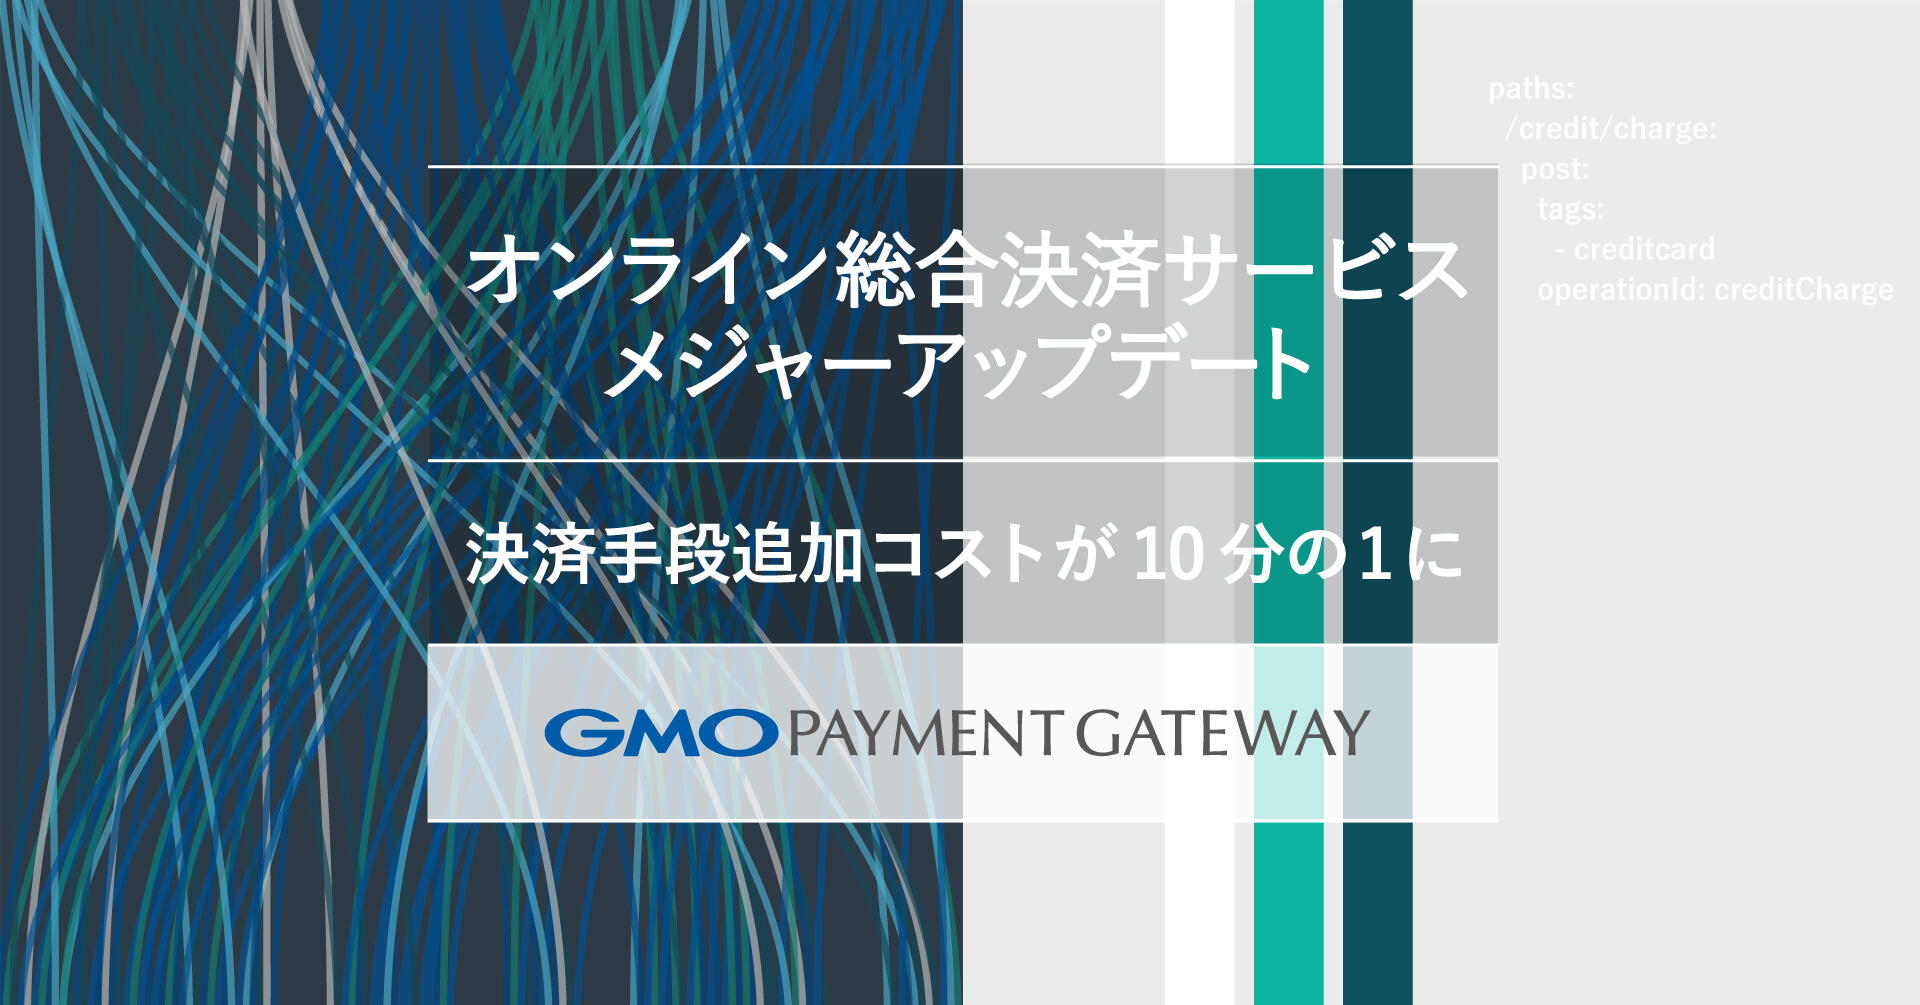 Major GMO-PG Online Payment Service Update